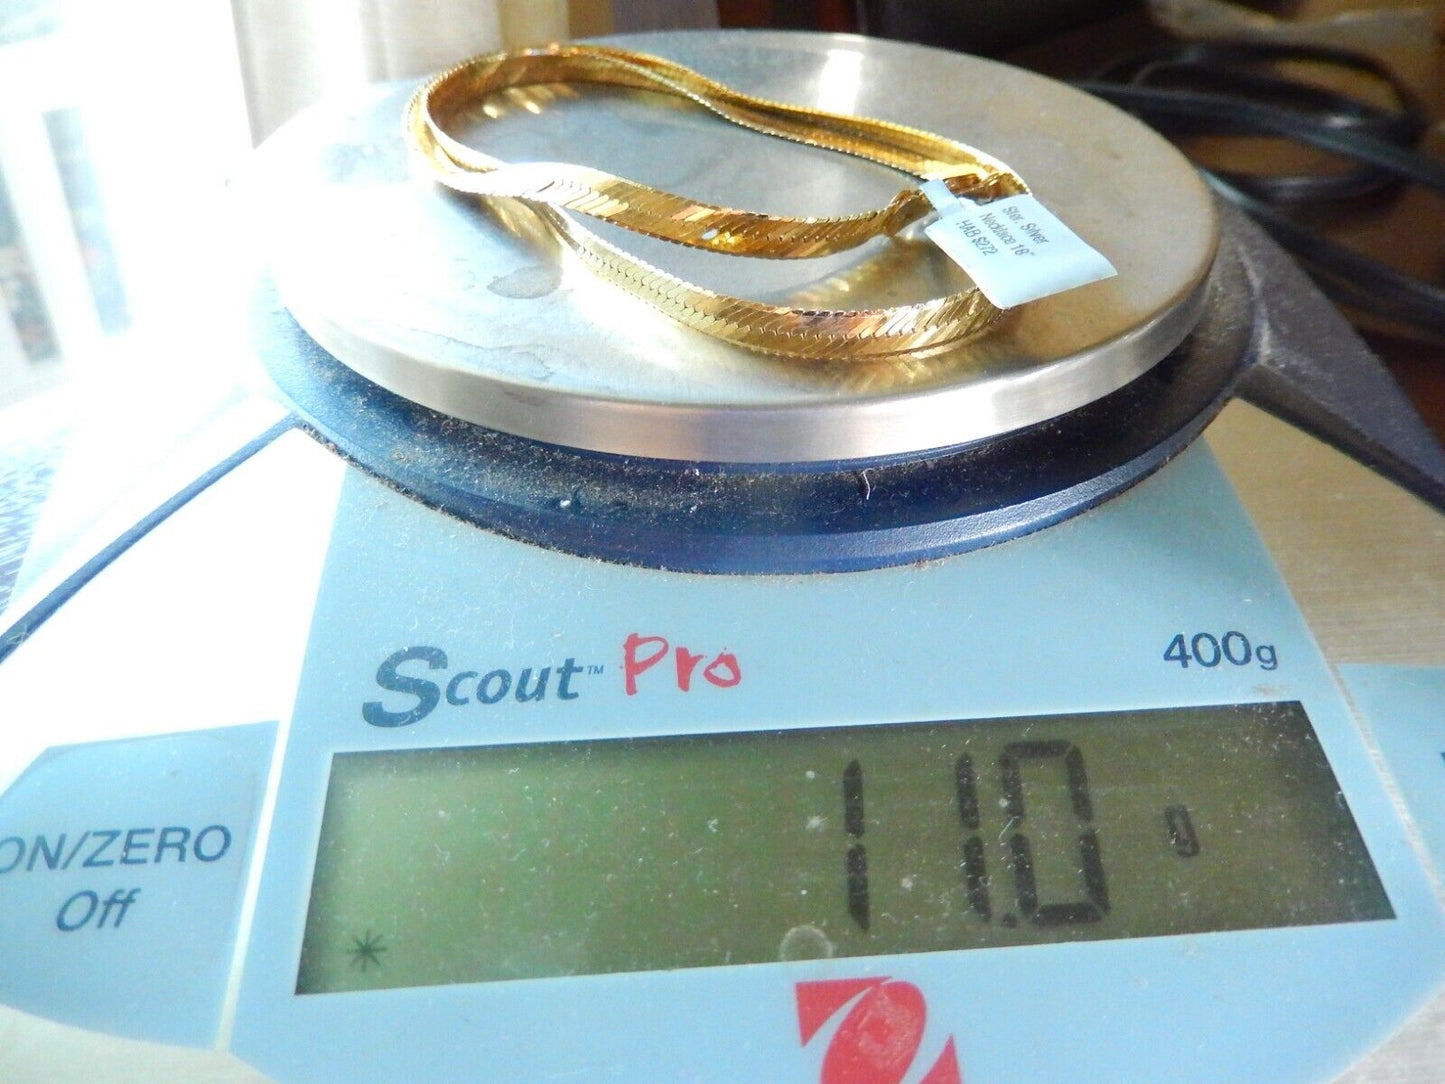 GOLD VERMEIL 5mm Flat Herringbone Chain .925 Necklace - 18"